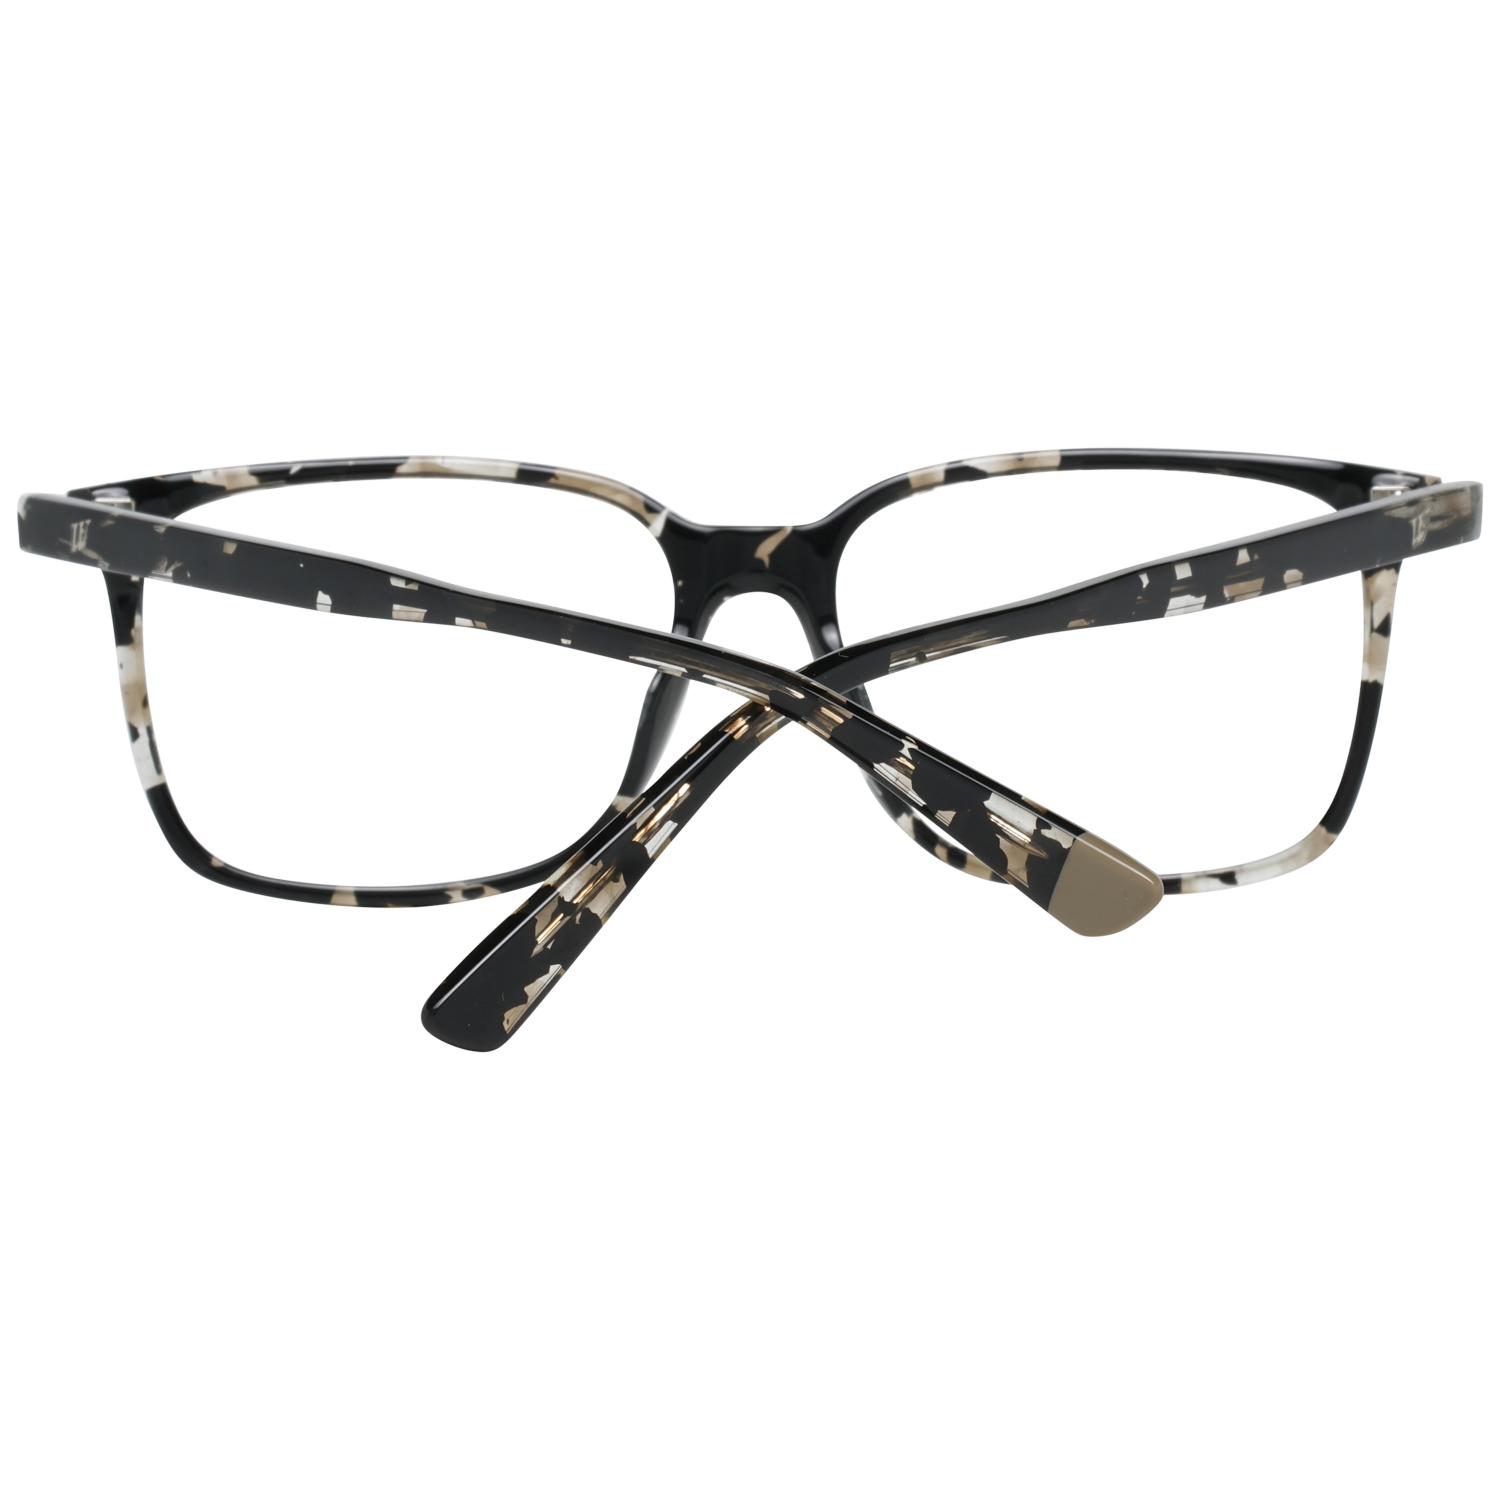 Web Frames Web Prescription Glasses Optical Frame WE5292 055 54 Eyeglasses Eyewear UK USA Australia 